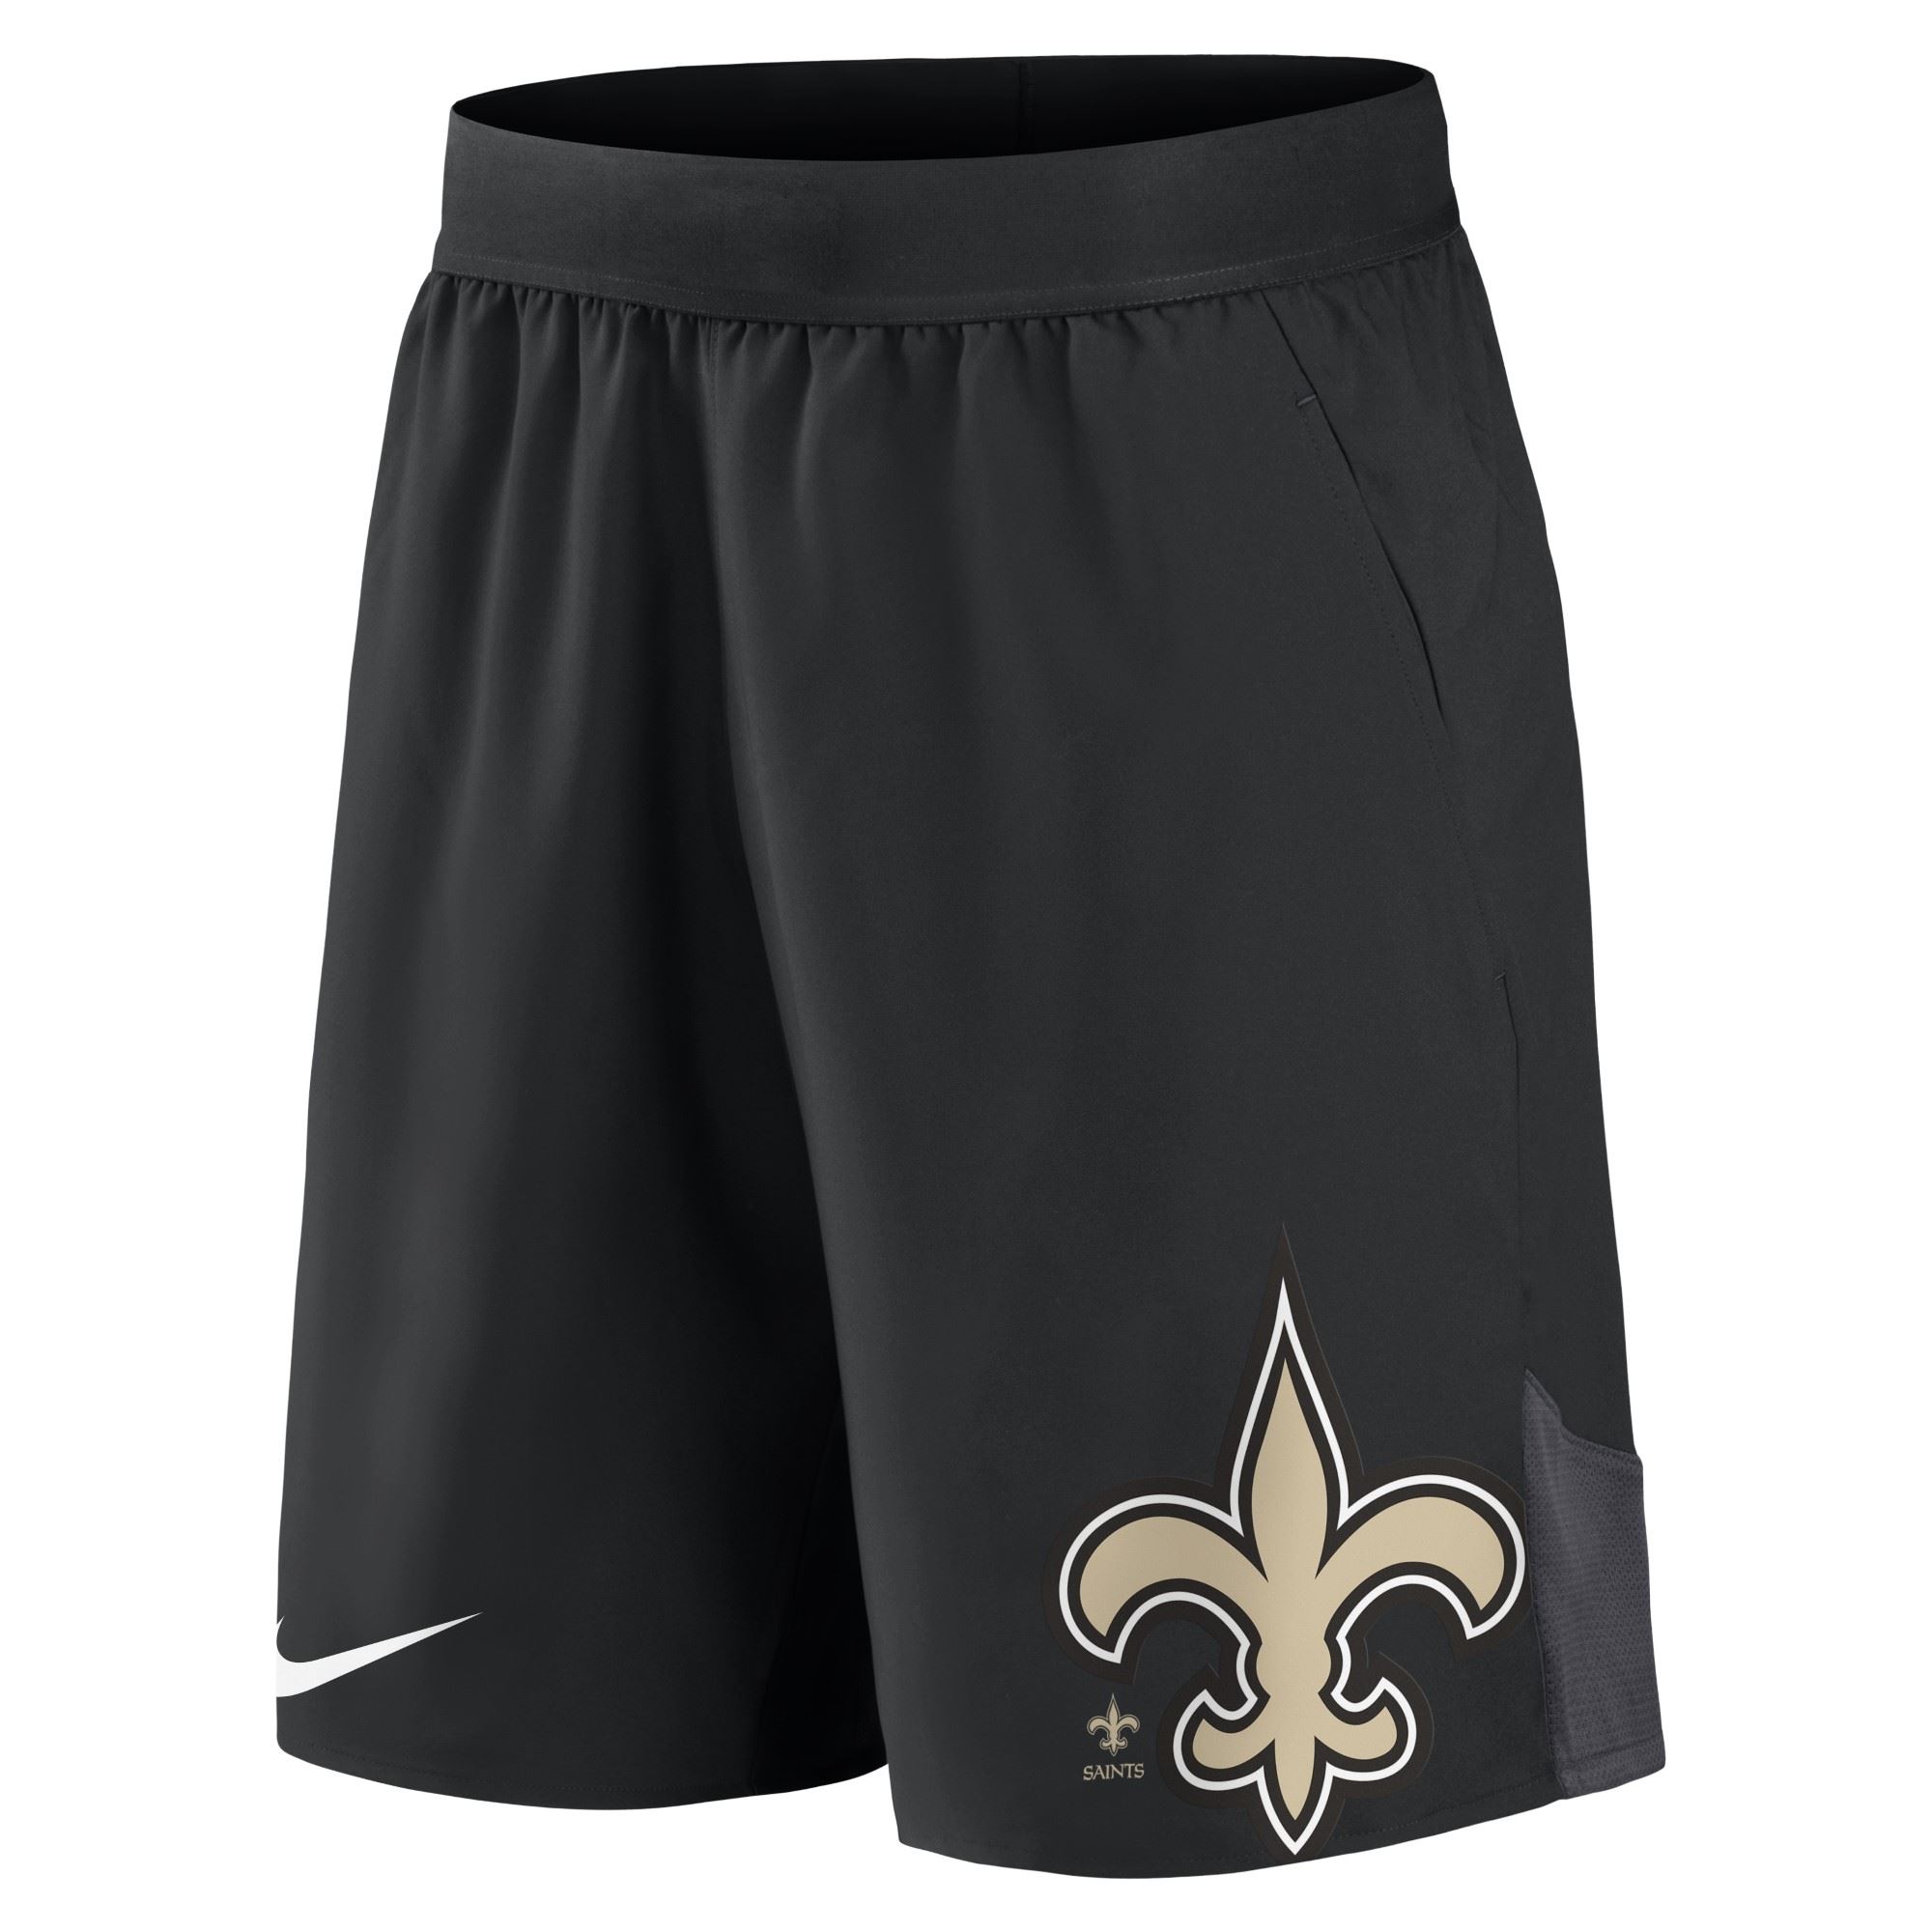 New Orleans Saints NFL Stretch Woven Short Black / Anthracite Hose Nike